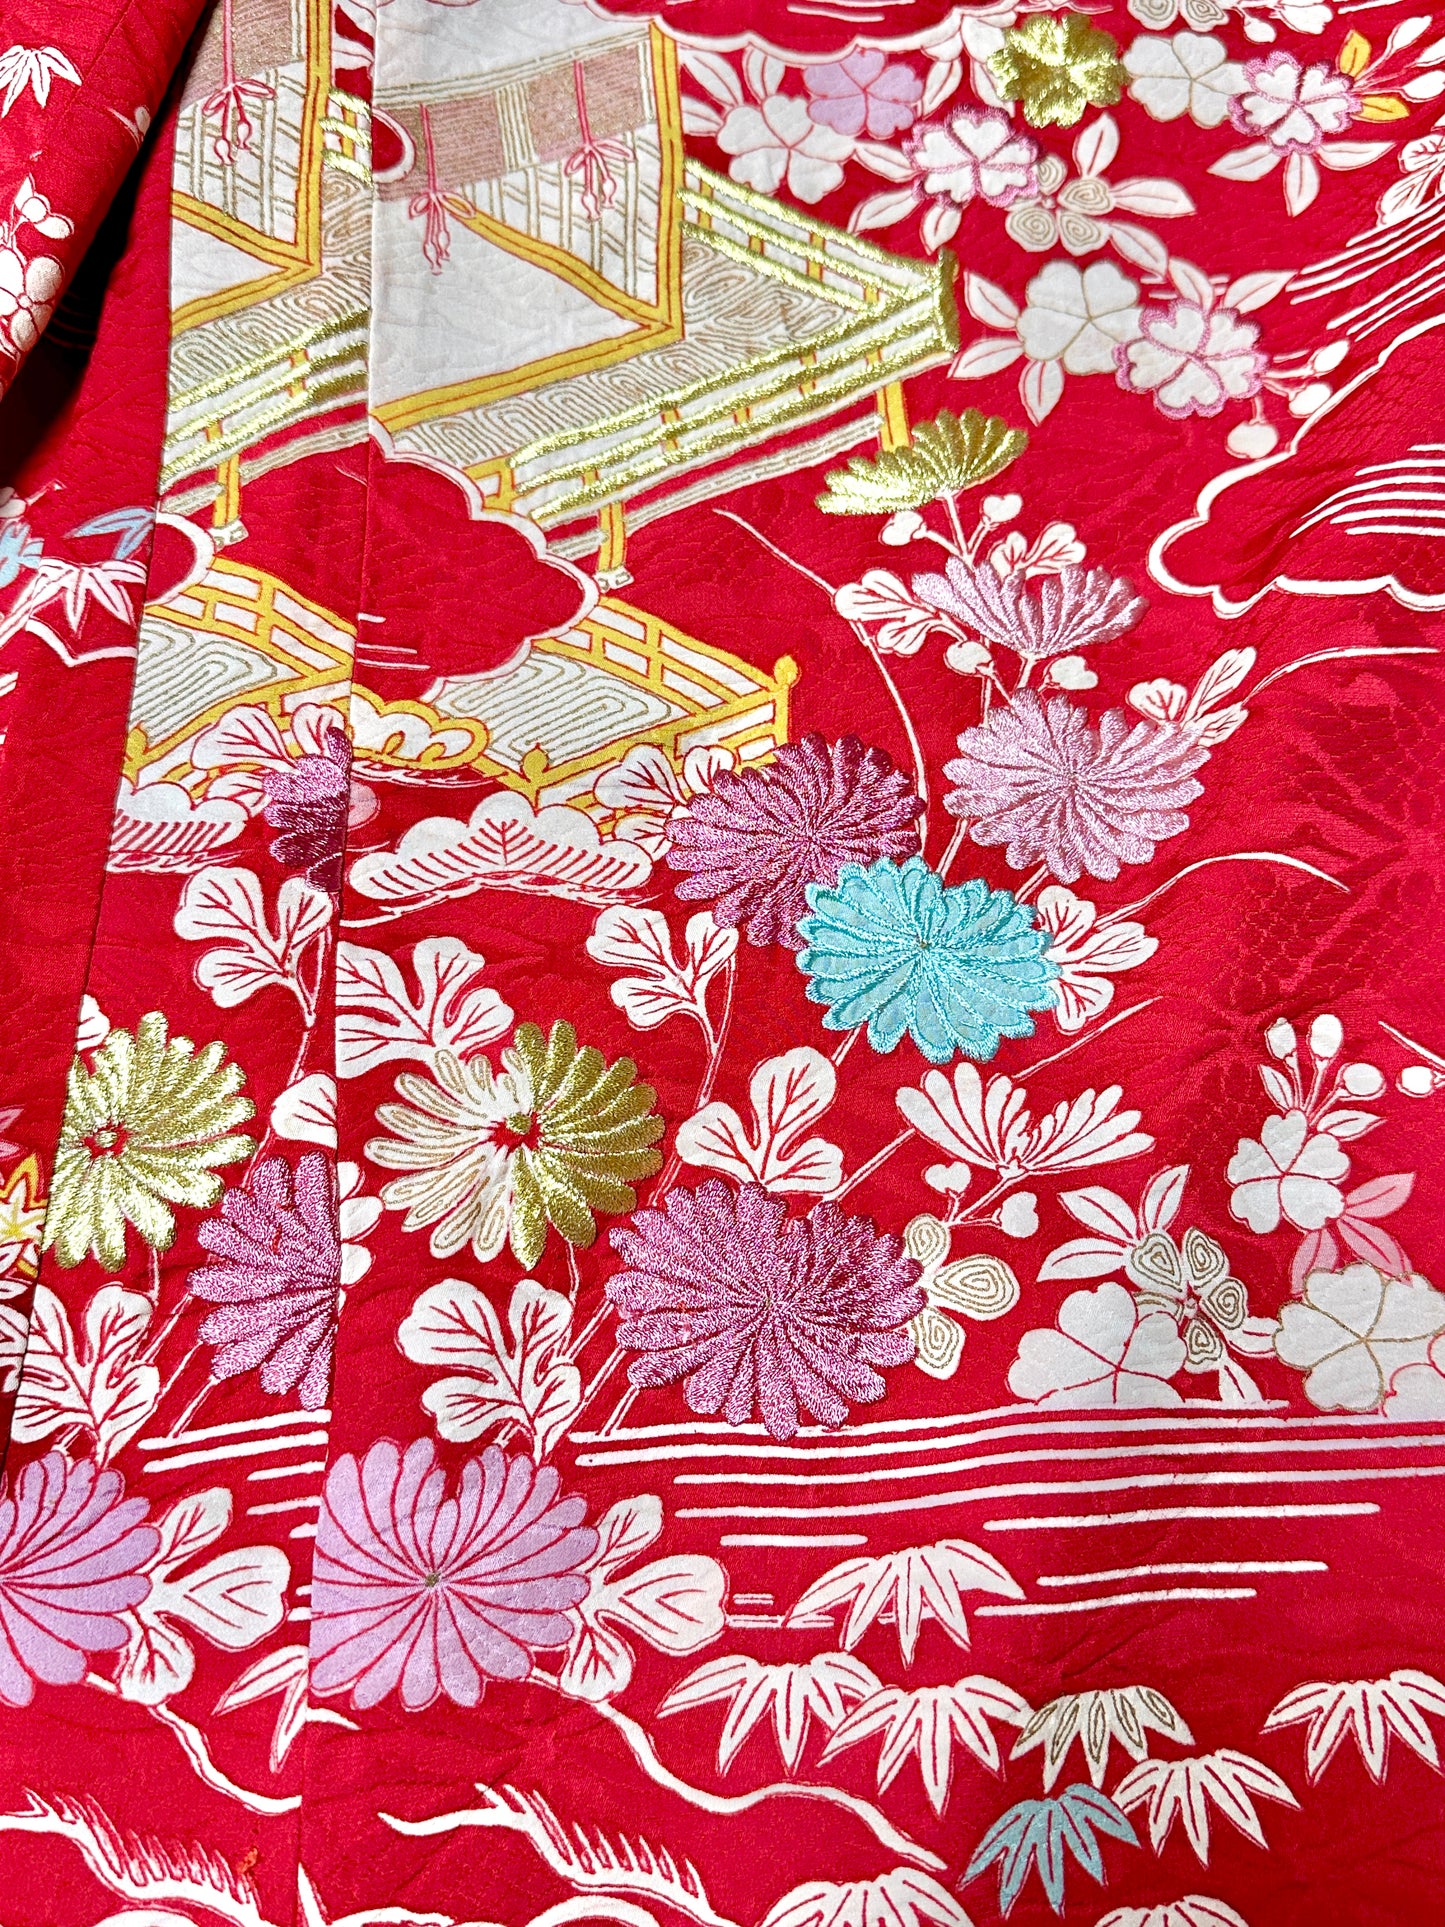 small size_KIMONO DRESSY elastic waist pants upcycled from Japanese kimono (antique red) & Tsuke-eri